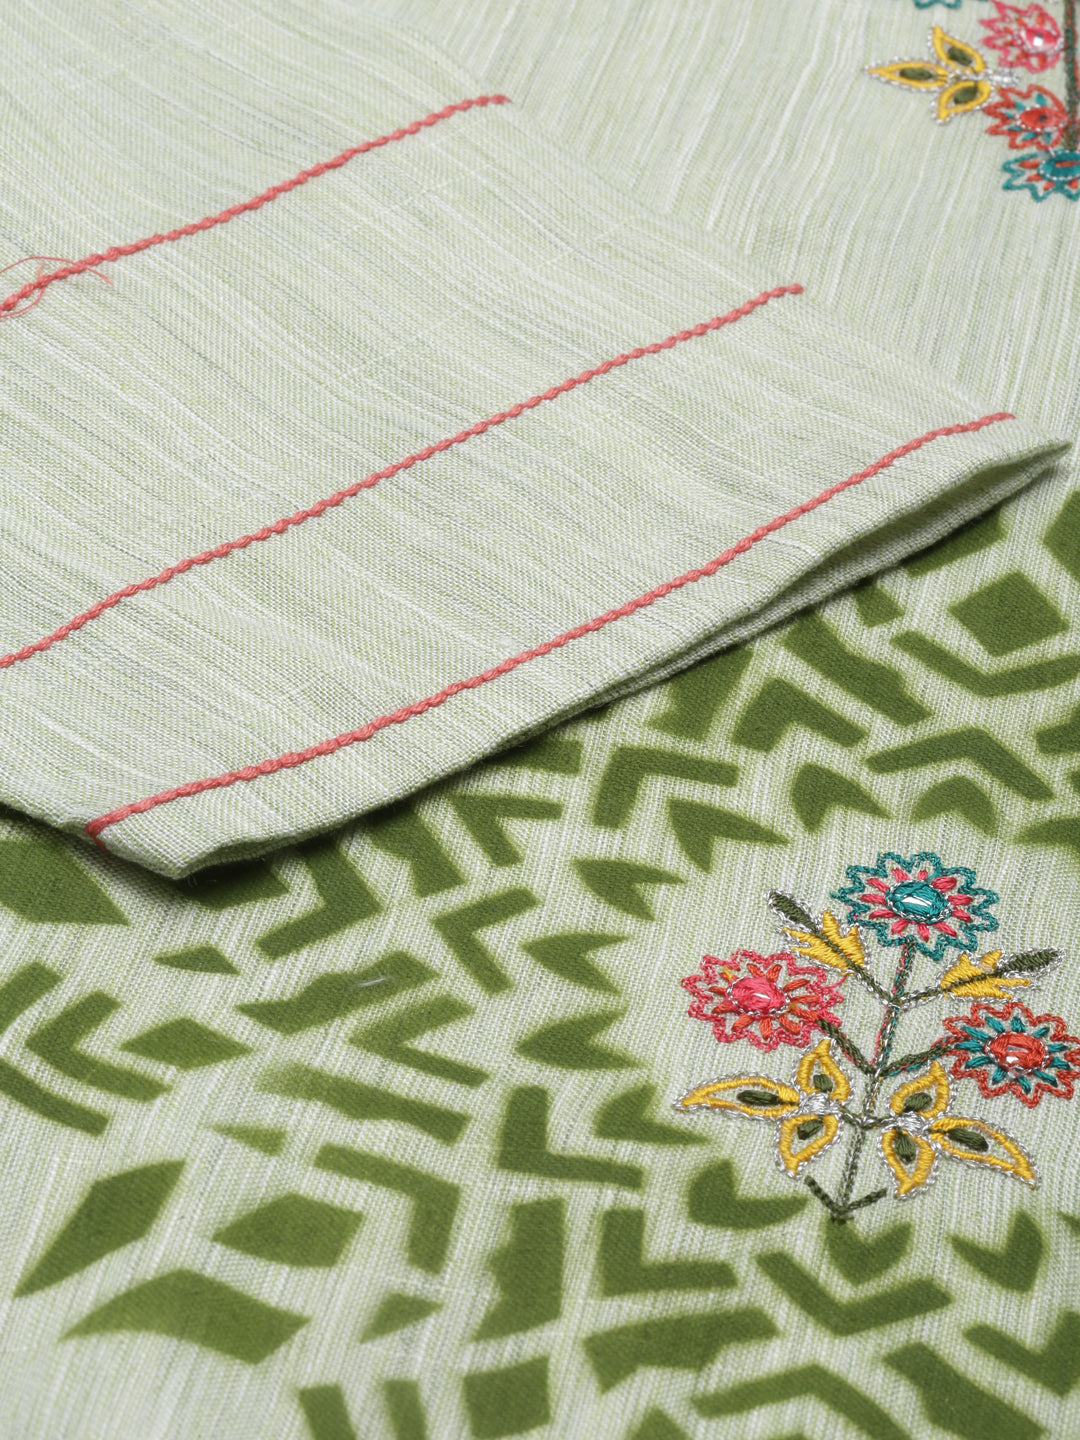 Neeru's Pista Color Handloom Fabric Kurta